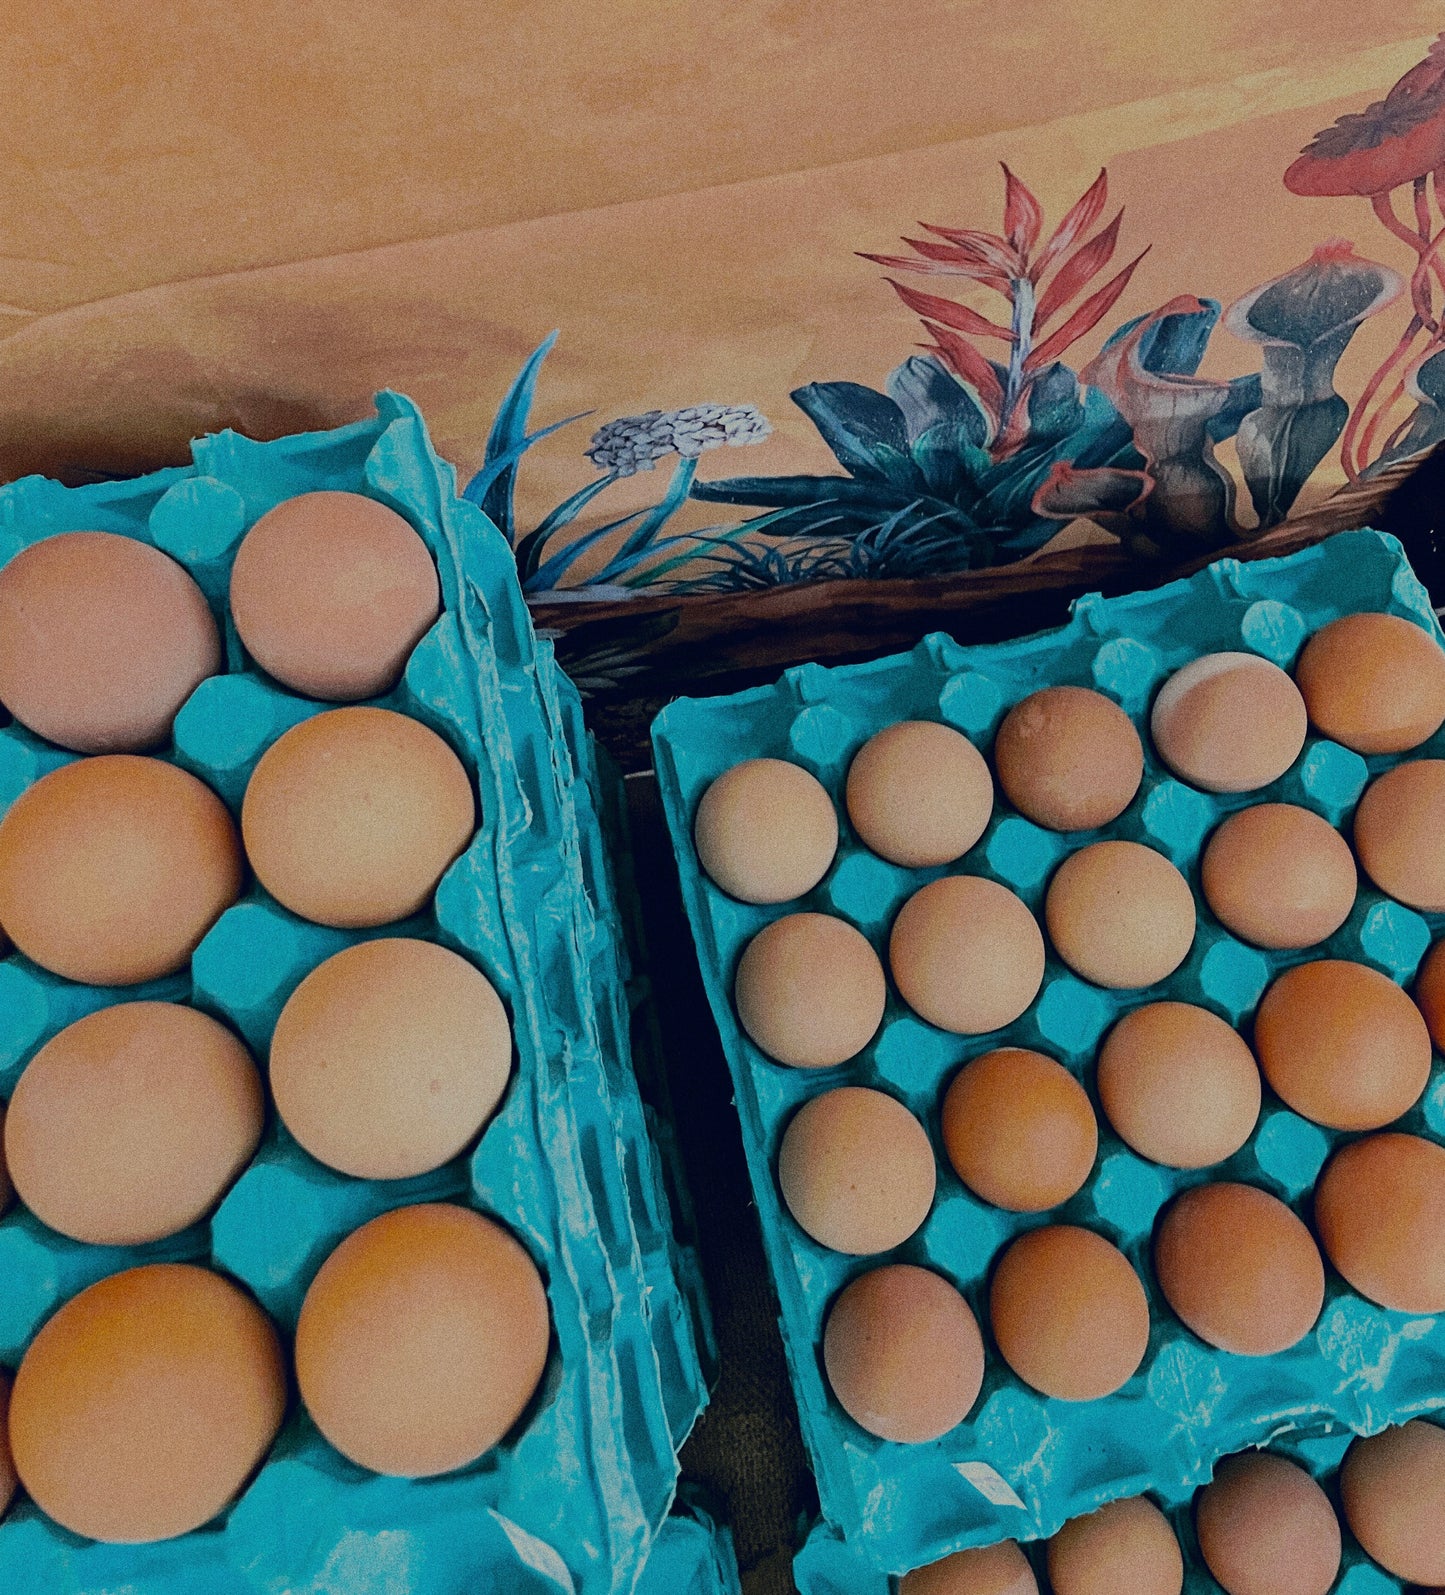 Free Range Eggs 20pk (The uglies)